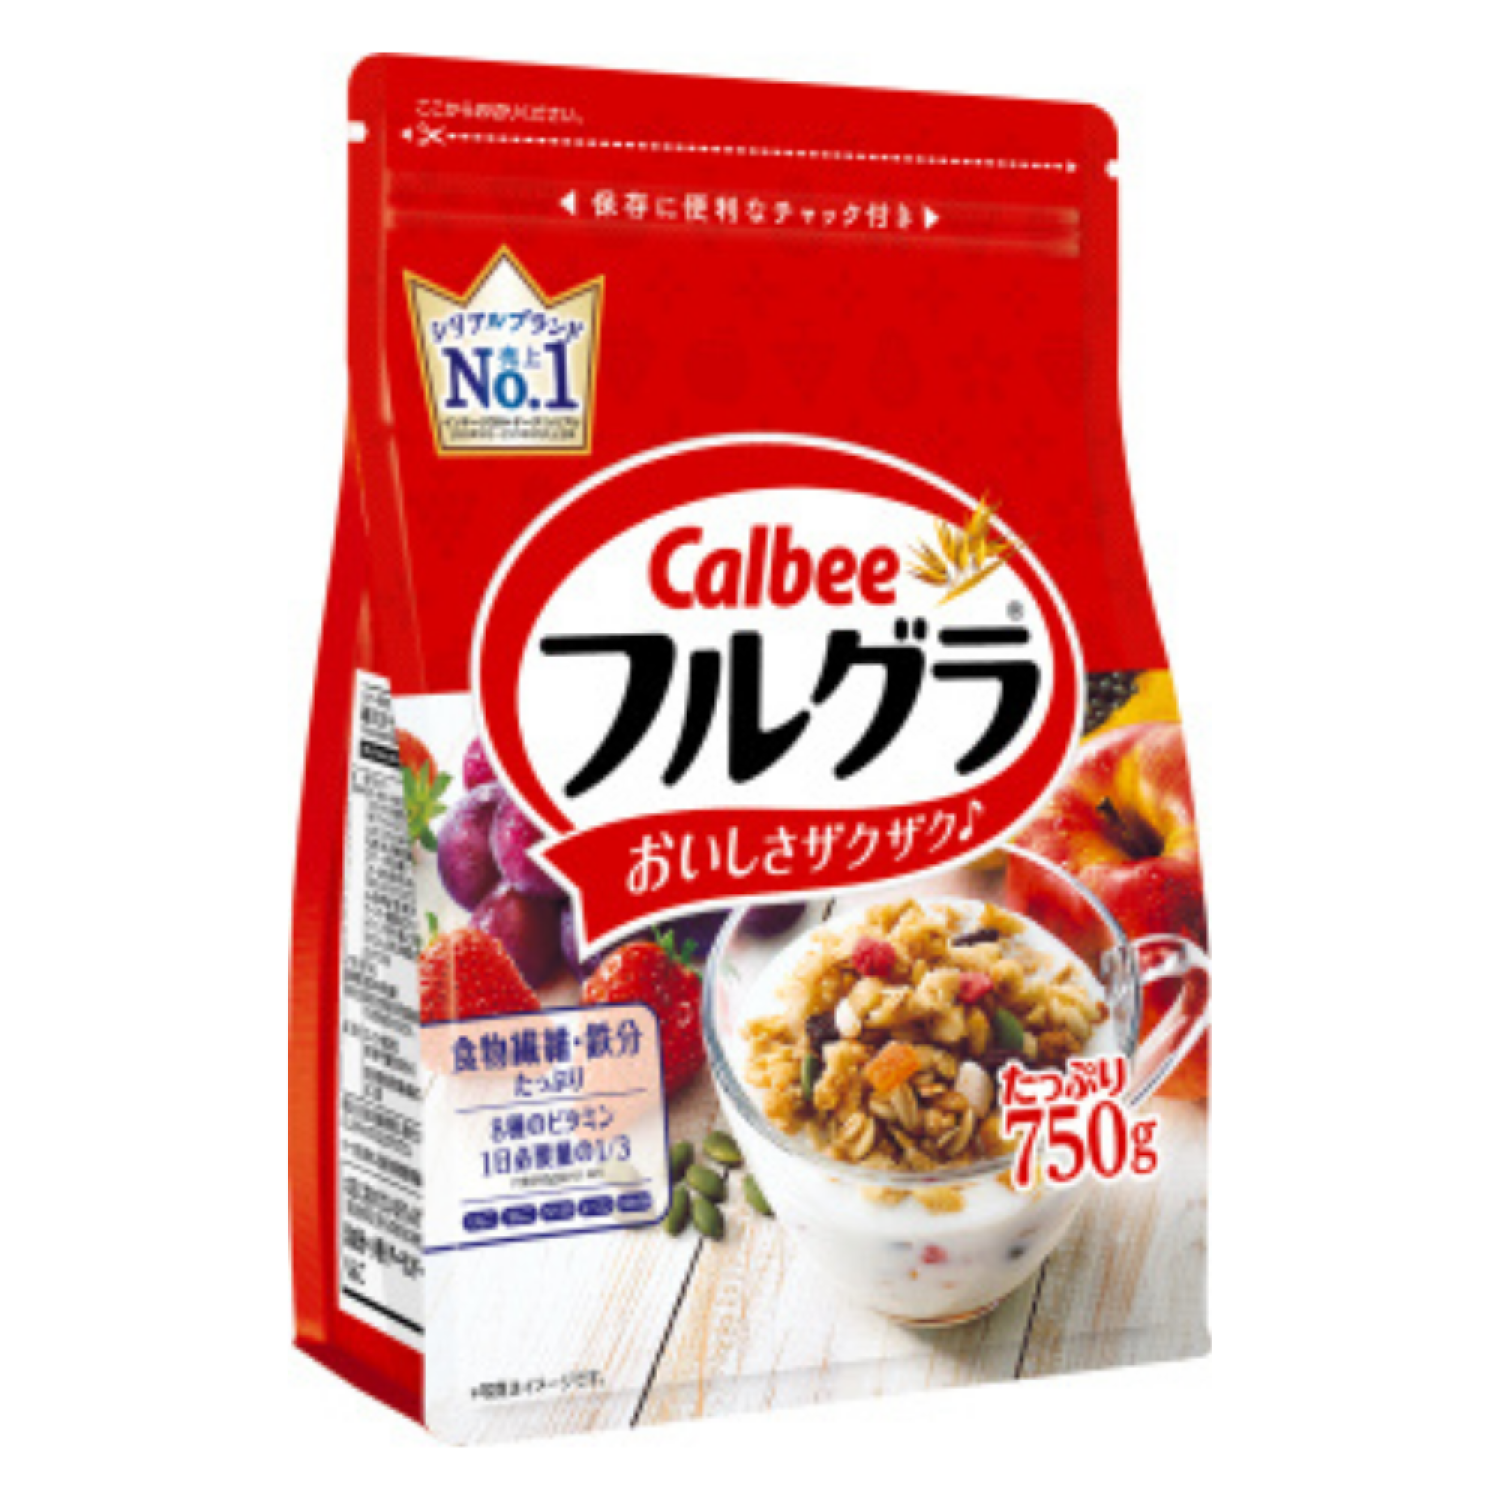 Ngũ cốc ăn sáng Calbee hoa quả Nhật 750g date 8 2022